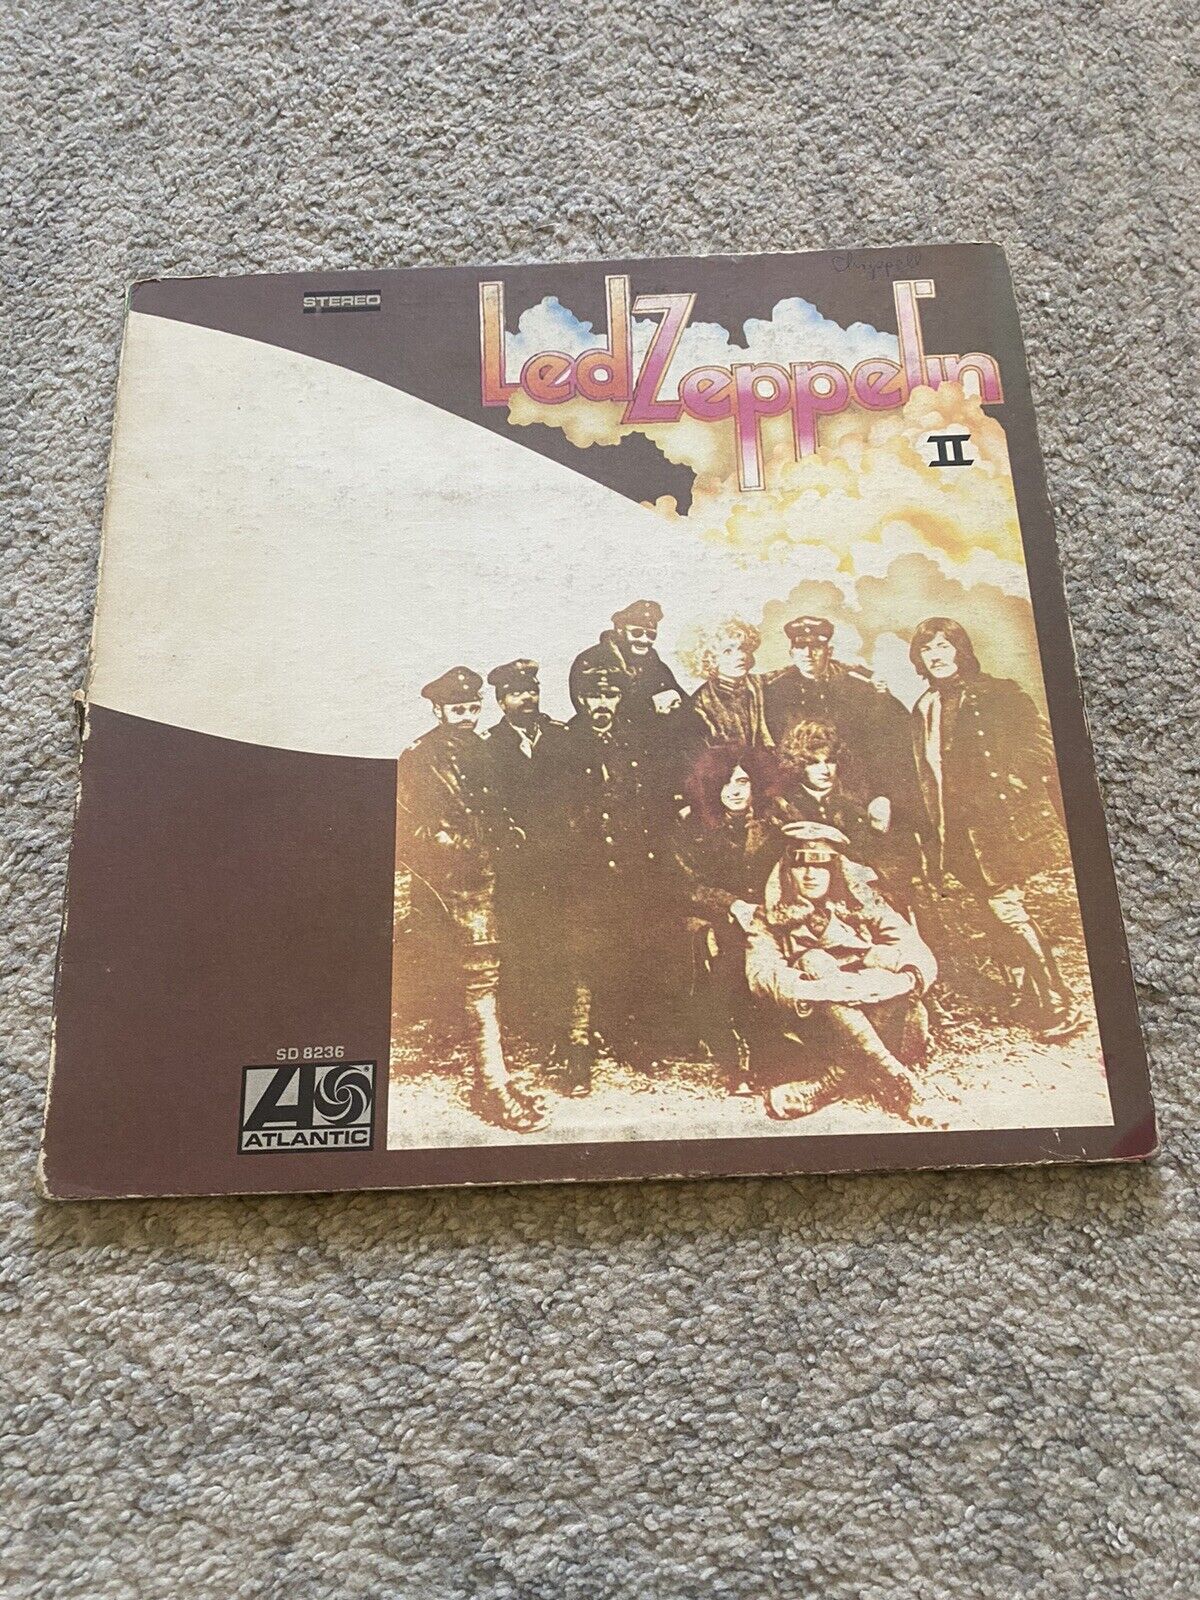 Led Zeppelin II; Atlantic 8236; RL SS; HOT MIX, Ludwig; CLEAN COPY, PR Press